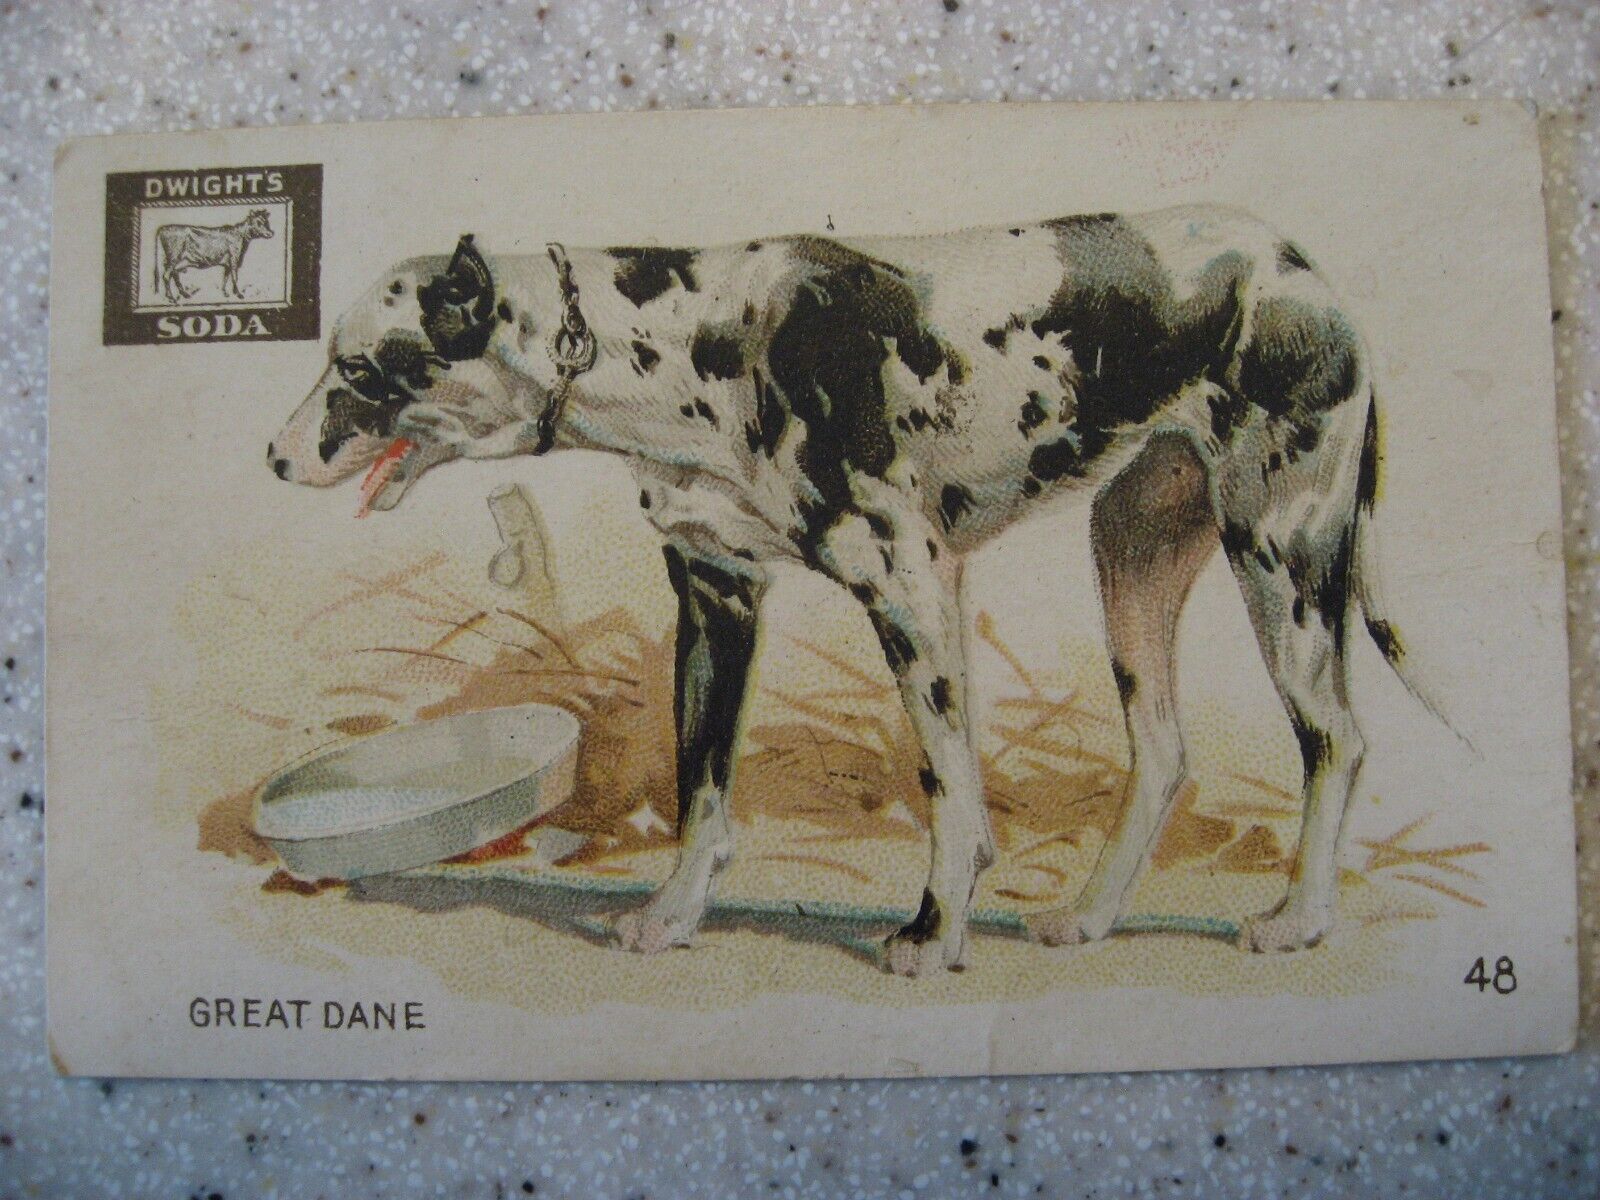 Vintage Dwight's Soda Interesting Animals Trading Card - No. 48 Great Dane